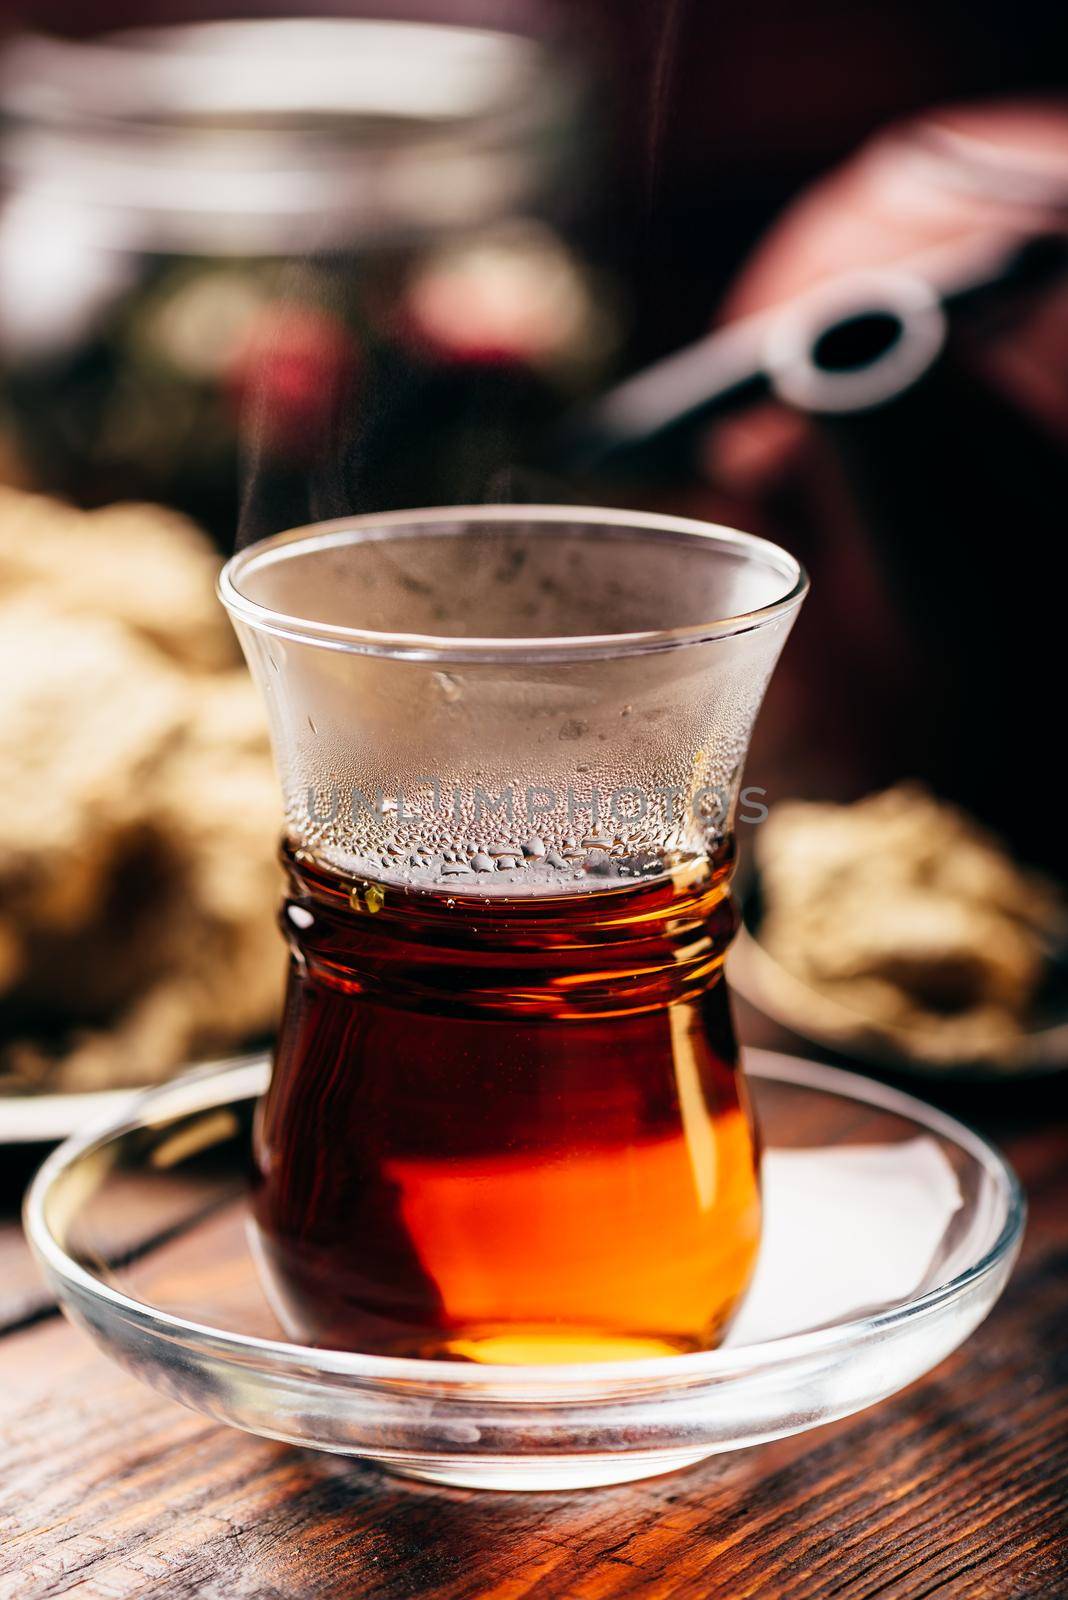 Armudu glass with black tea by Seva_blsv